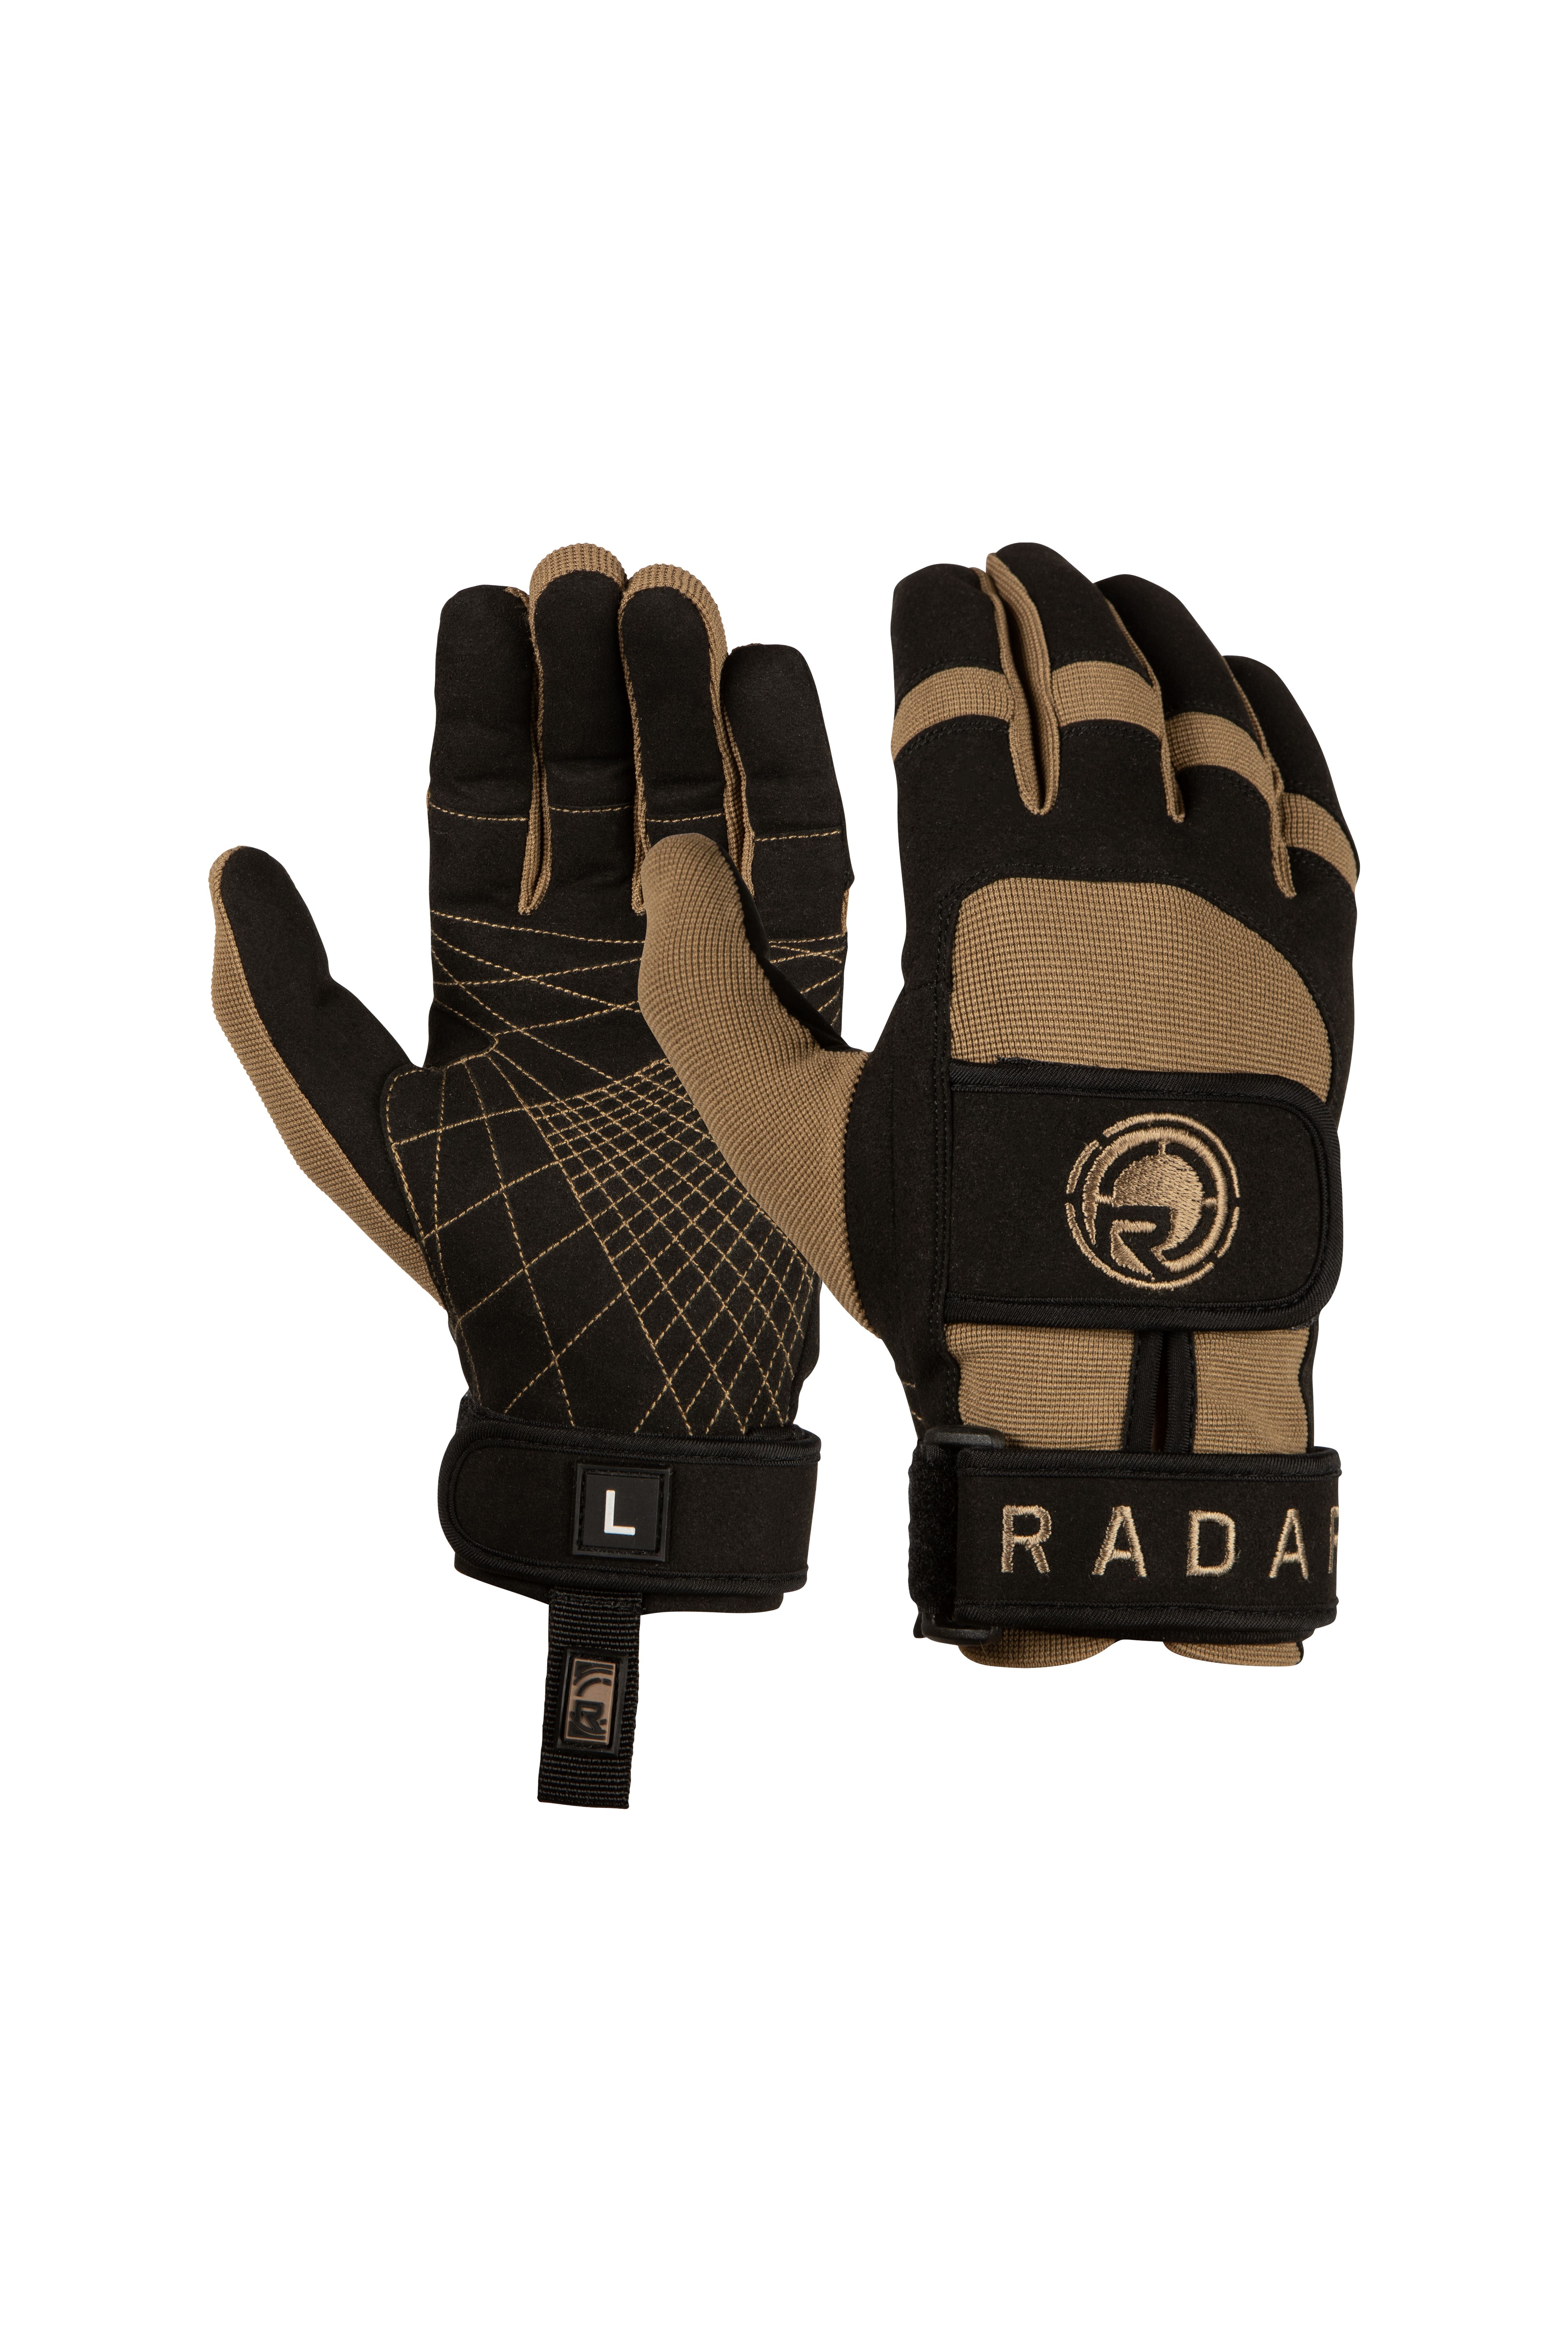 Radar Podium Gloves